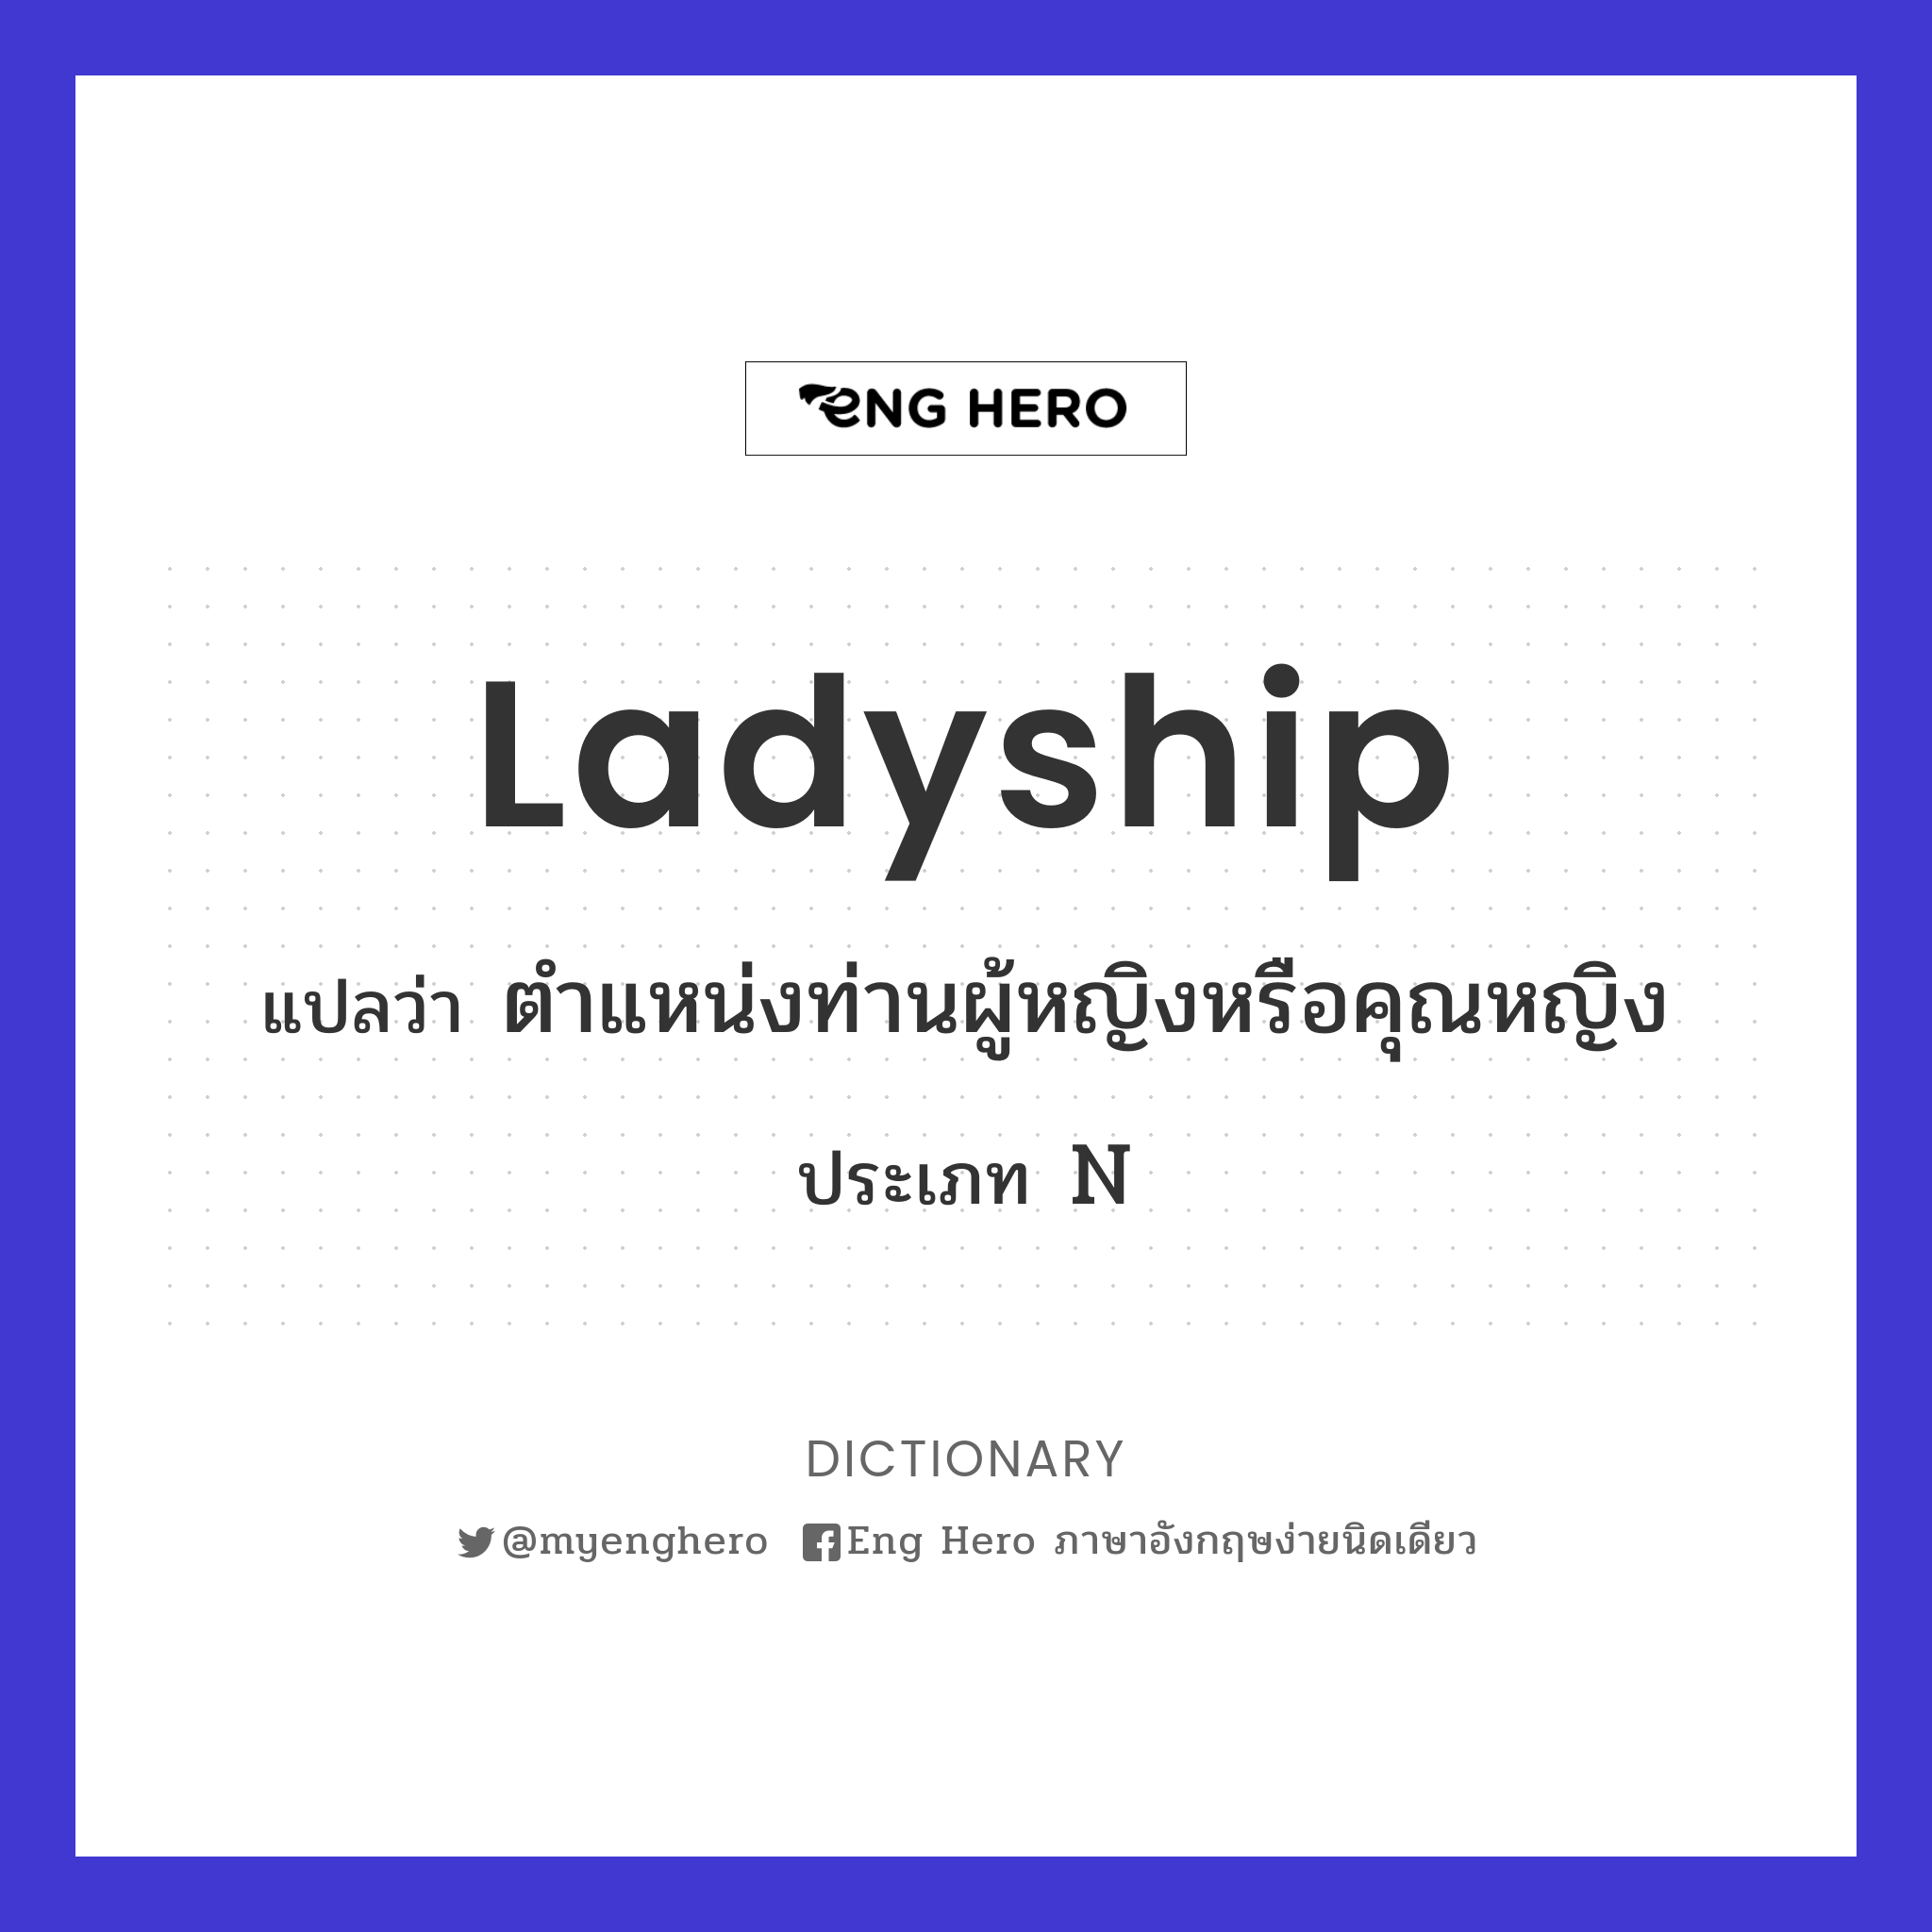 ladyship